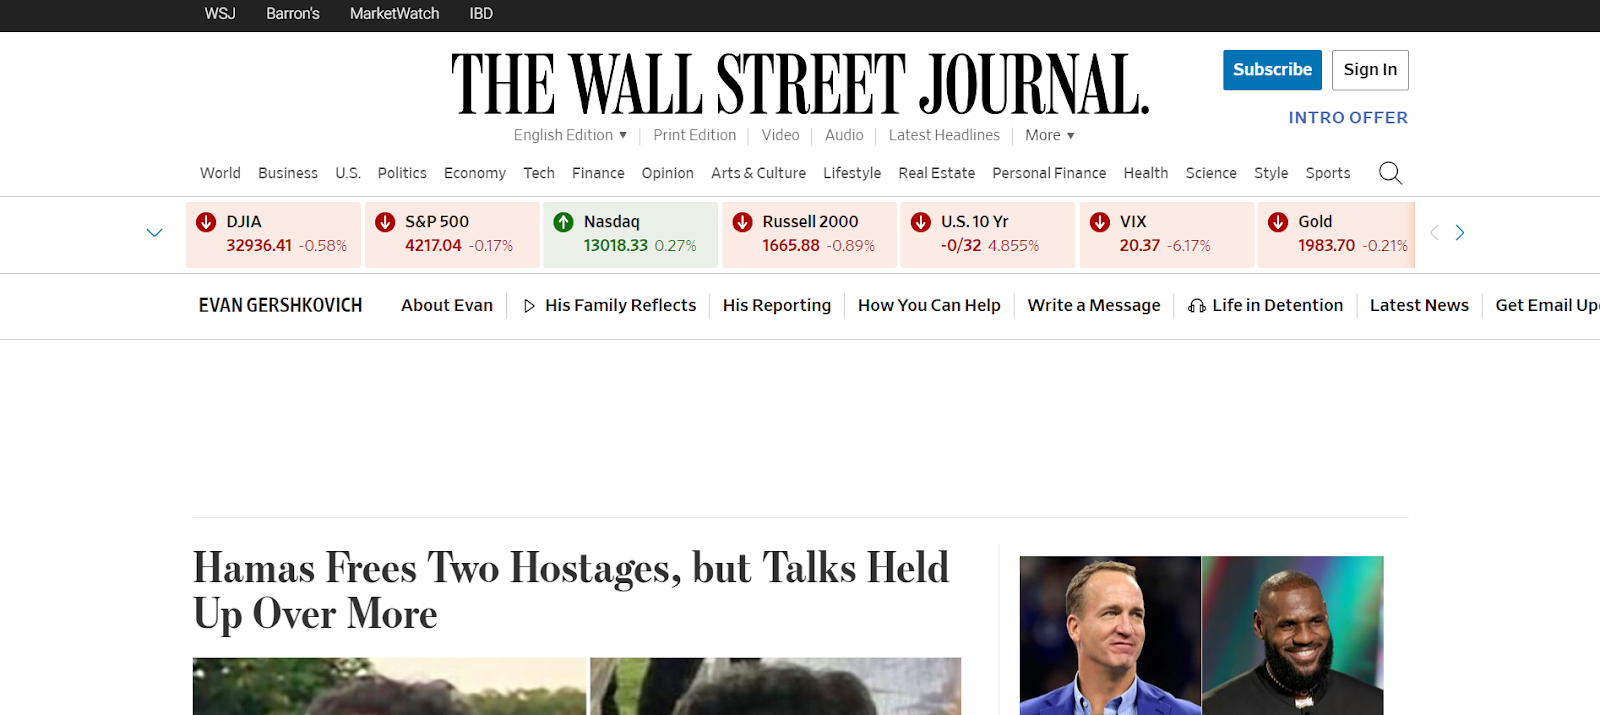 9. The Wall Street Journal.